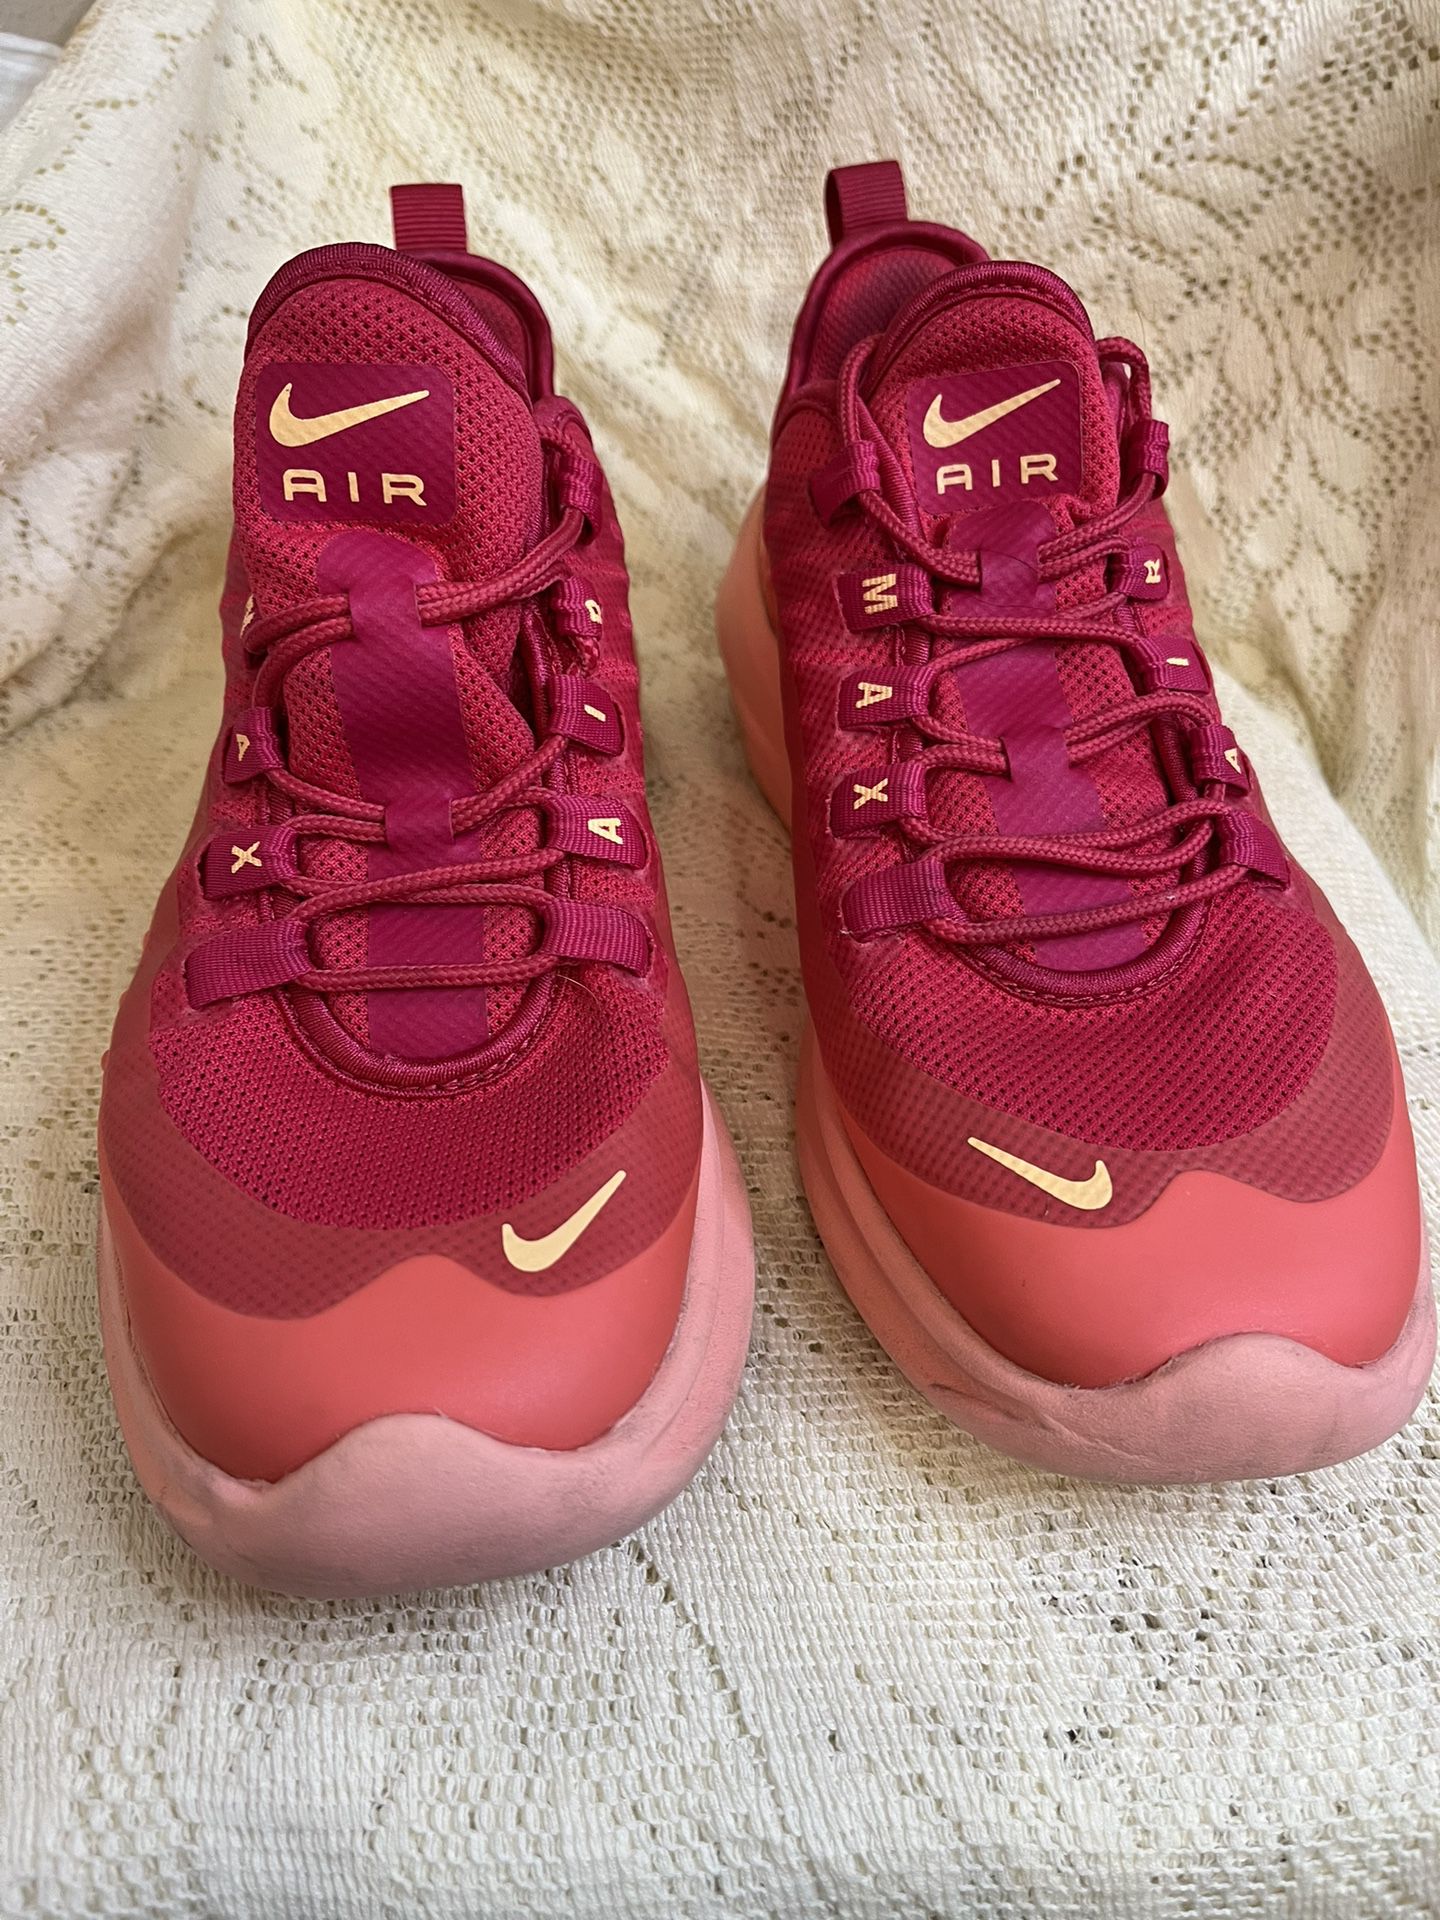 Nike Air Max Axis Pink Rush Shoes 8.5